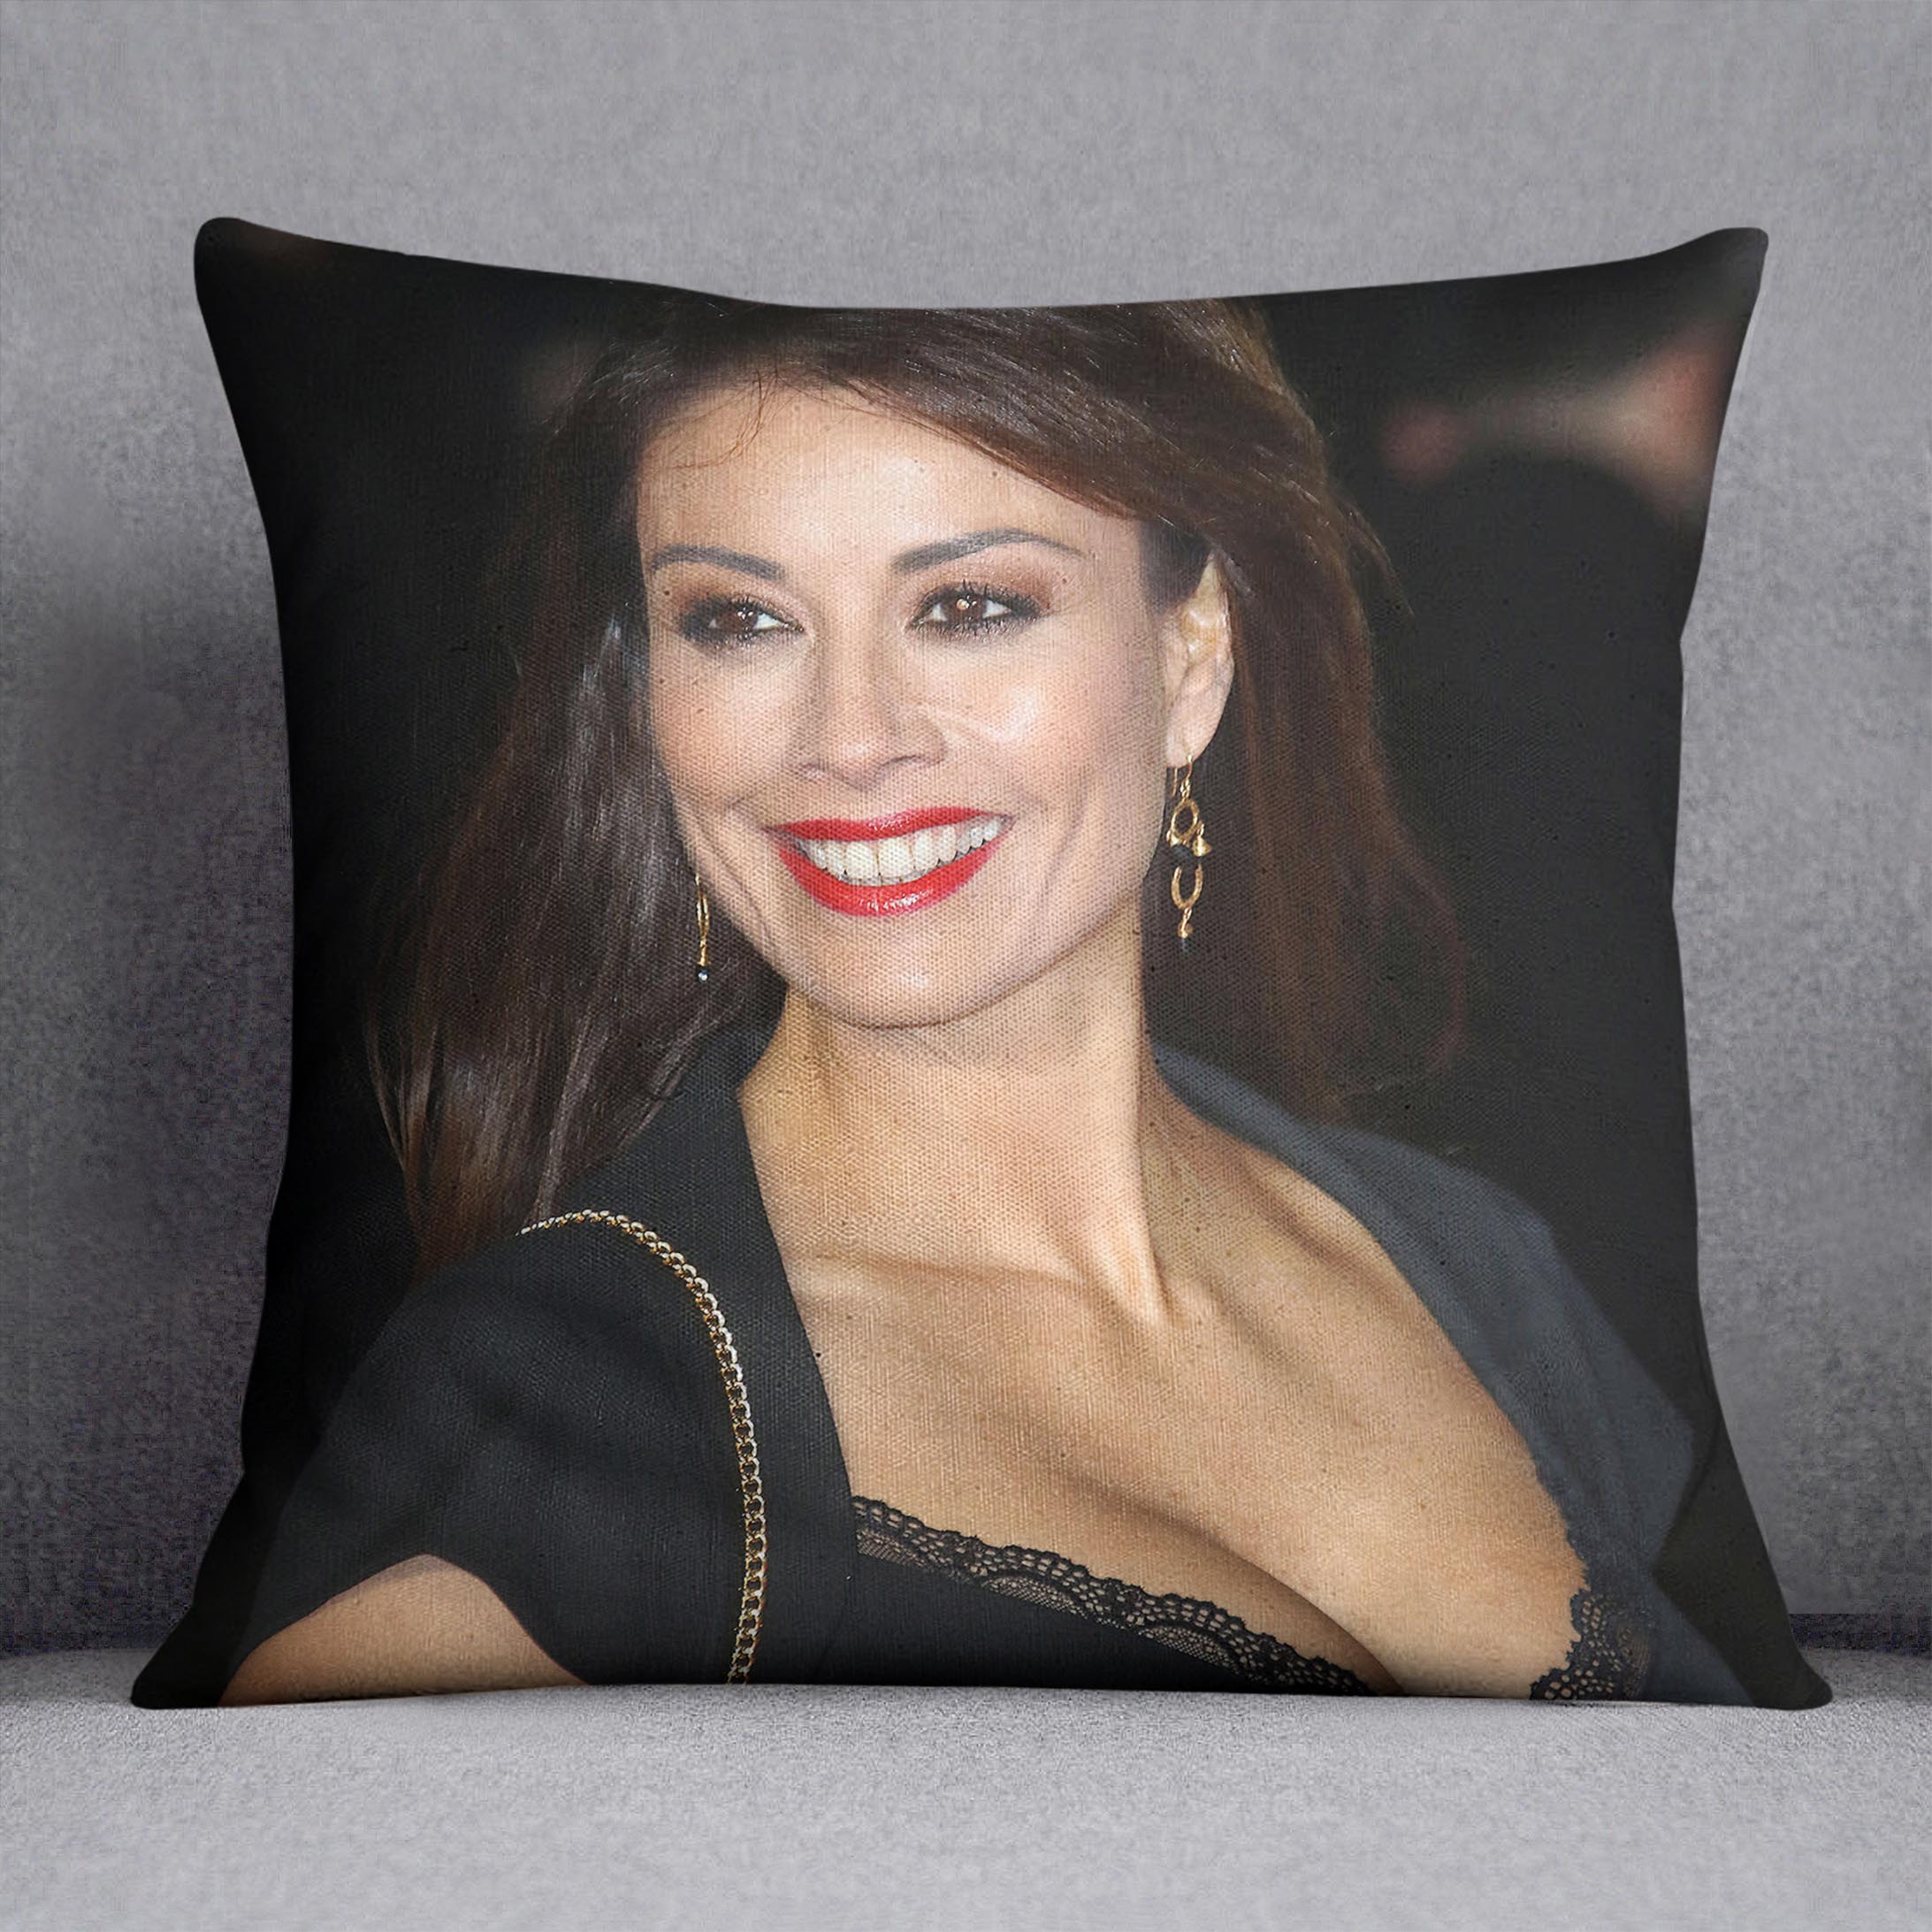 Melanie Sykes in a black dress Cushion